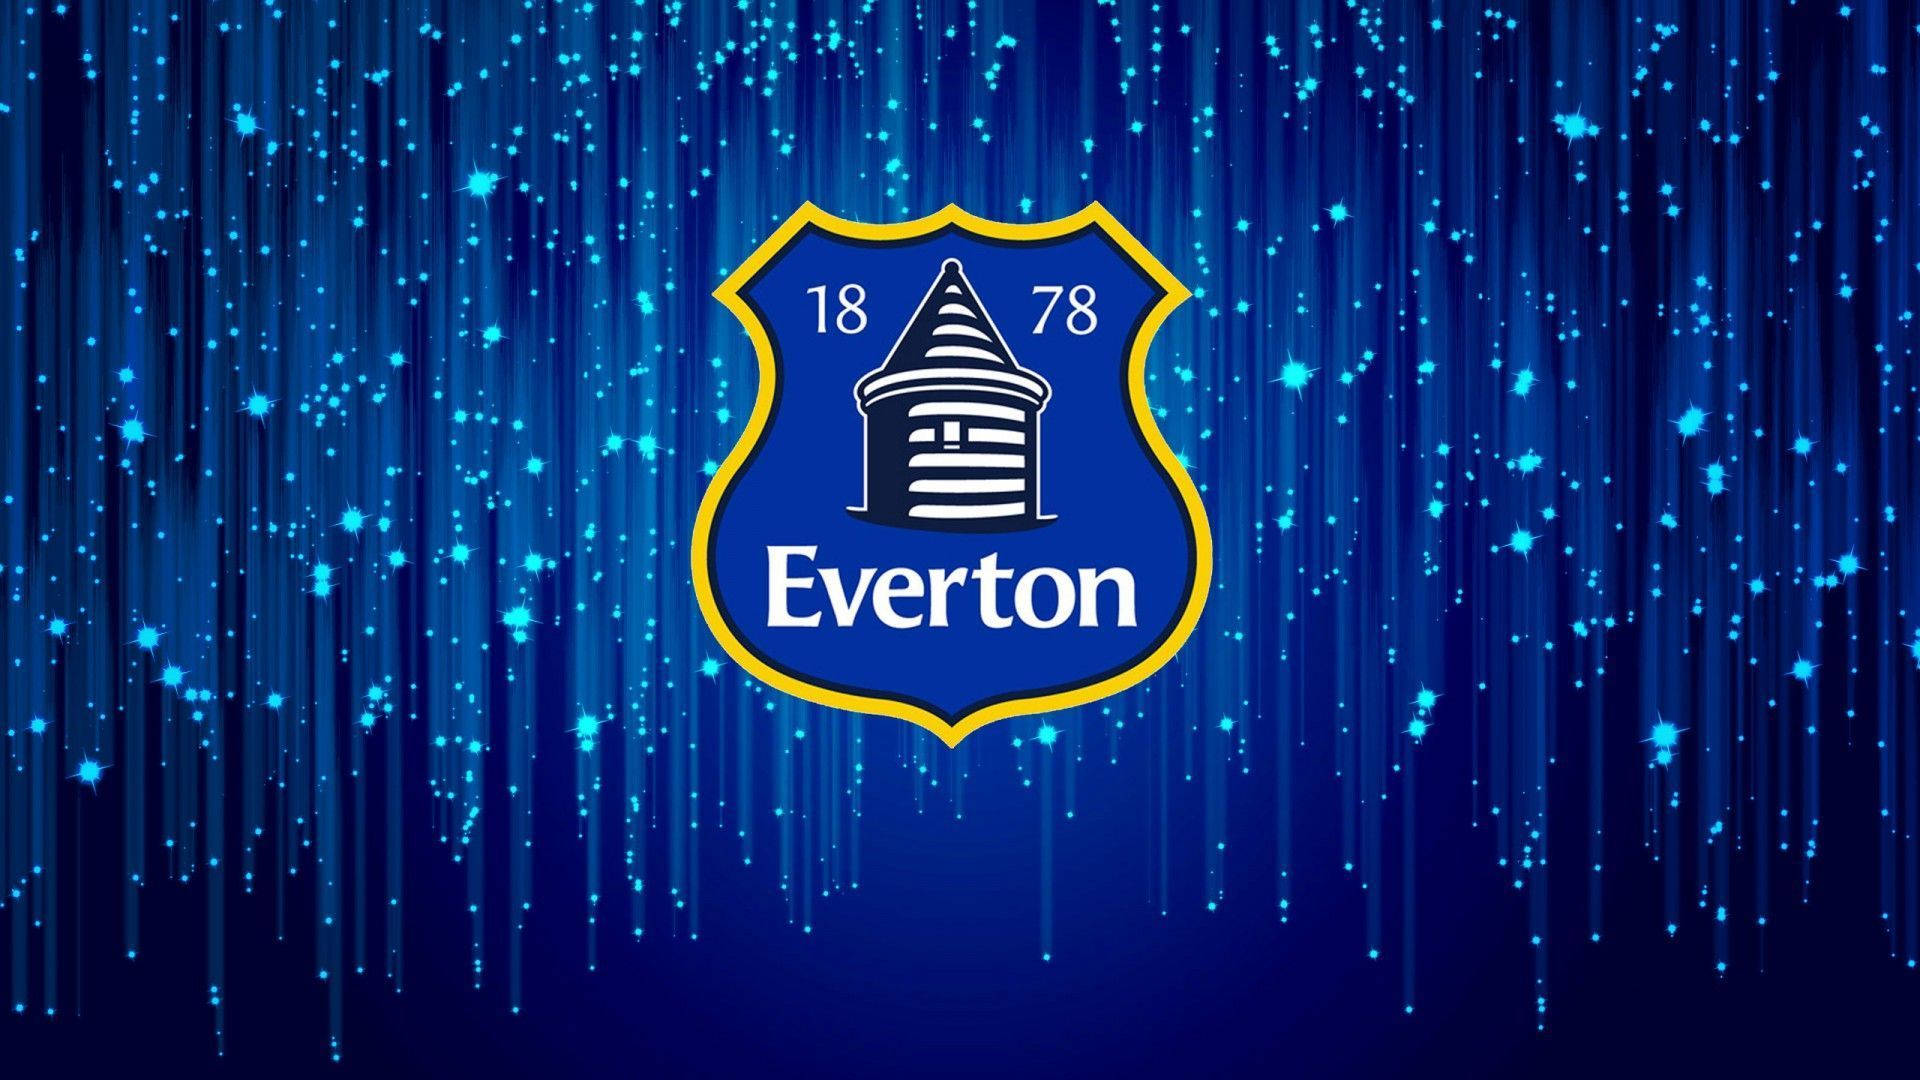 Everton F.c Emblem In Dark Blue